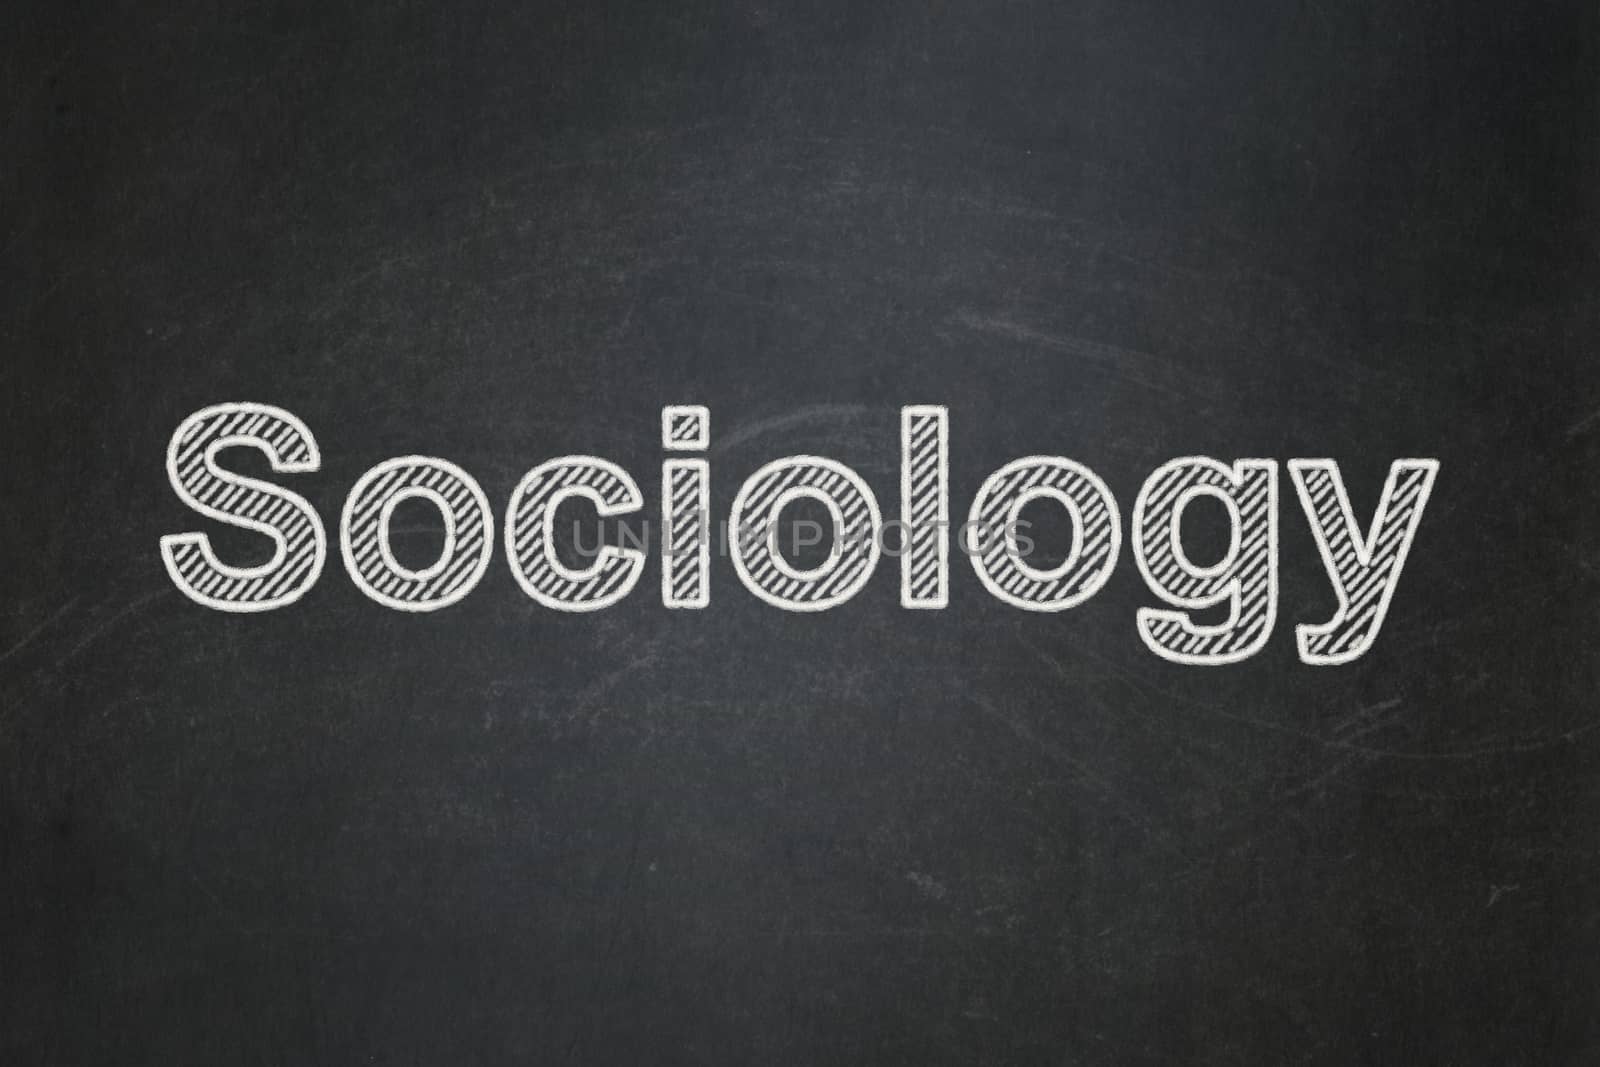 Studying concept: Sociology on chalkboard background by maxkabakov